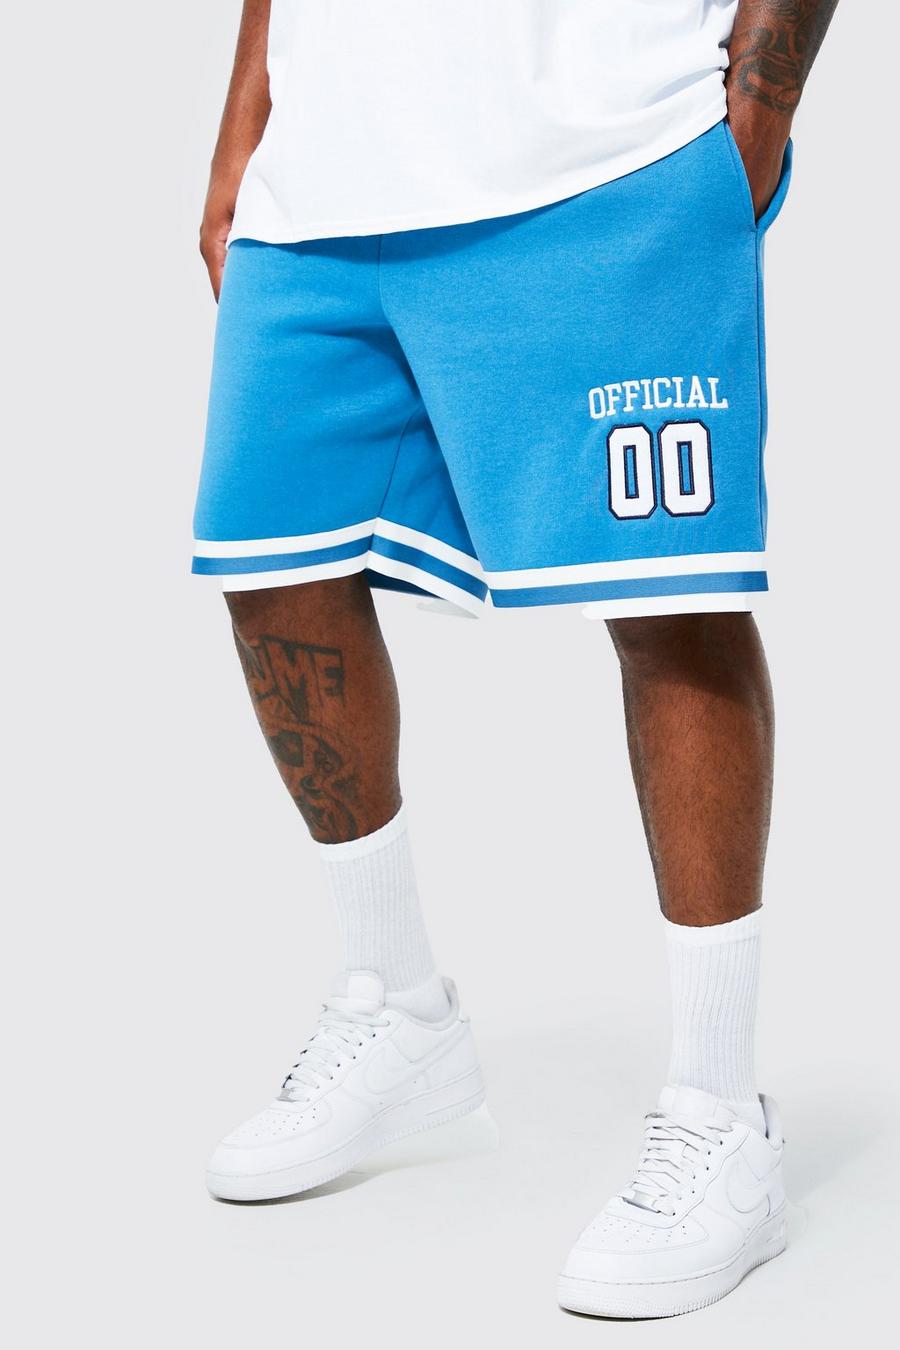 Pantalón corto Plus de tela jersey estilo baloncesto con aplique universitario, Blue azzurro